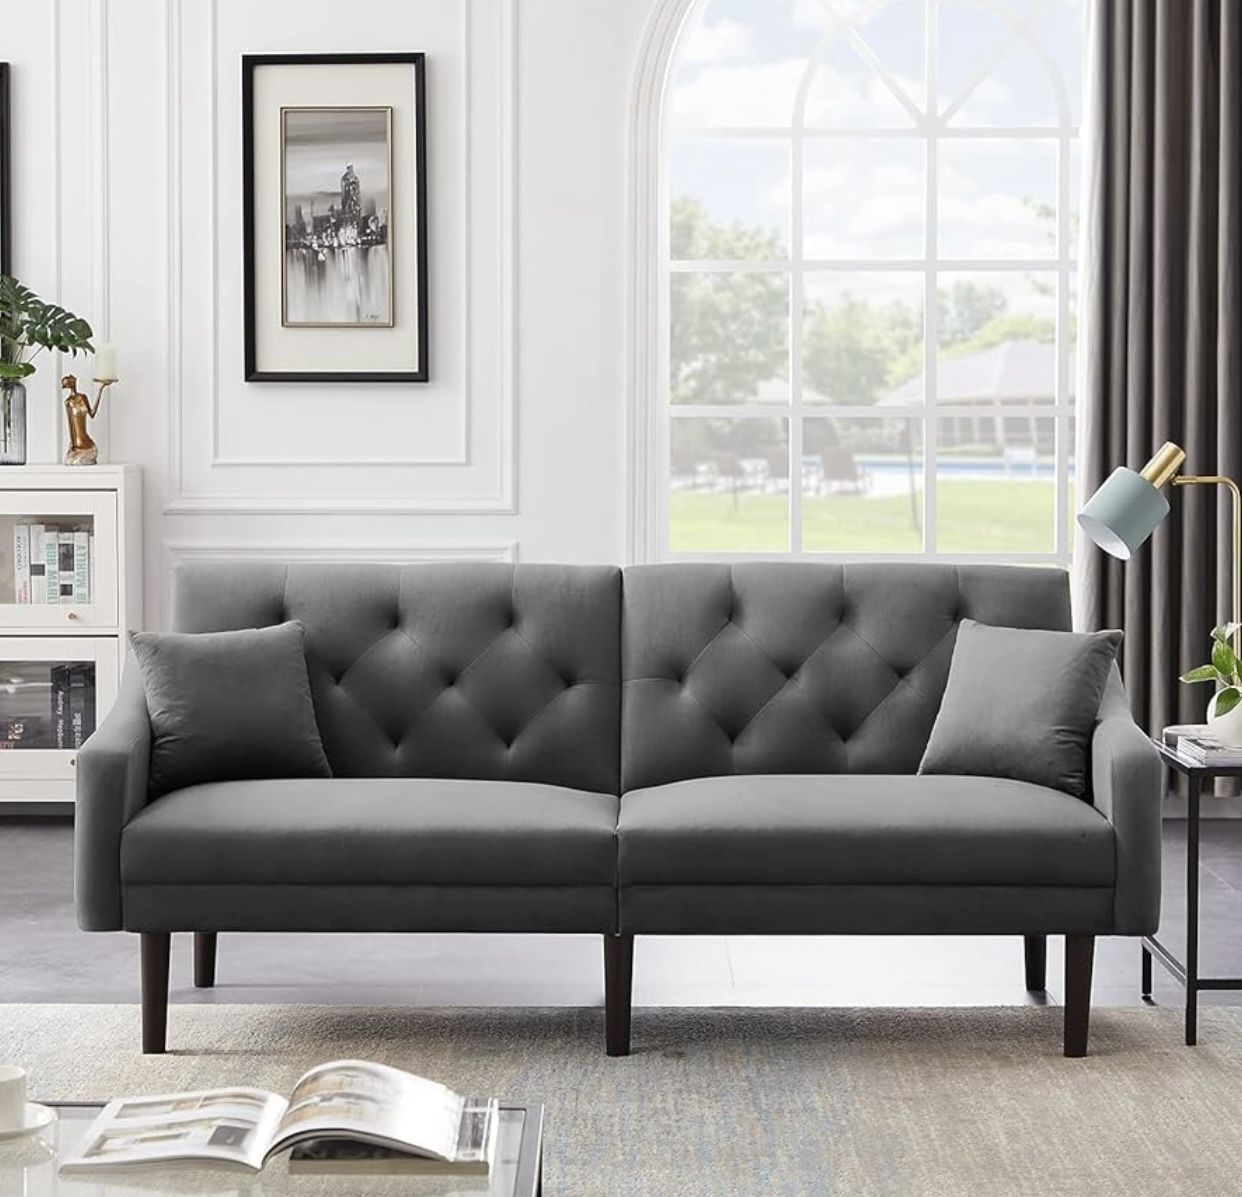 New in box Velvet Futon Sofa Bed Modern Sleeper Sofa with 6 Solid Wood Legs-grey